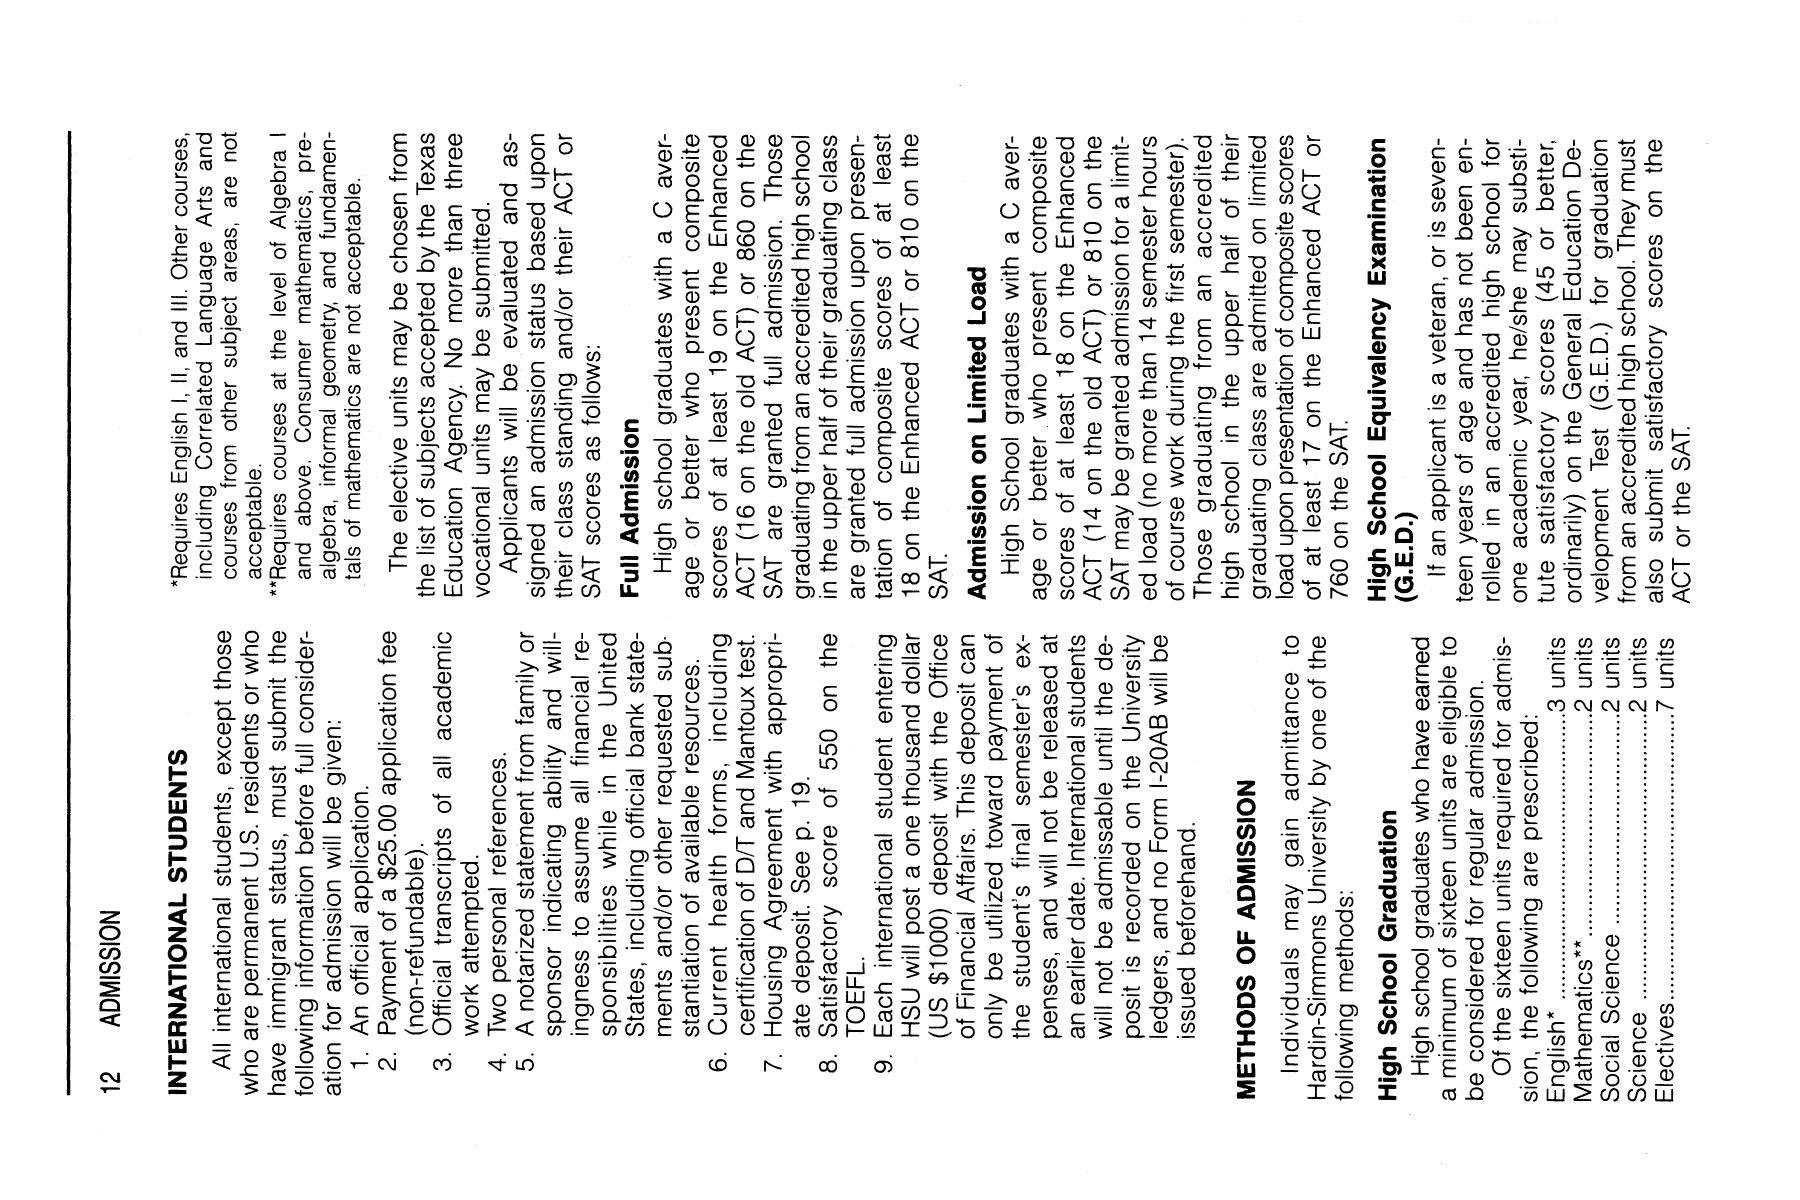 Catalog of Hardin-Simmons University, 1992-1993 Undergraduate Bulletin
                                                
                                                    12
                                                